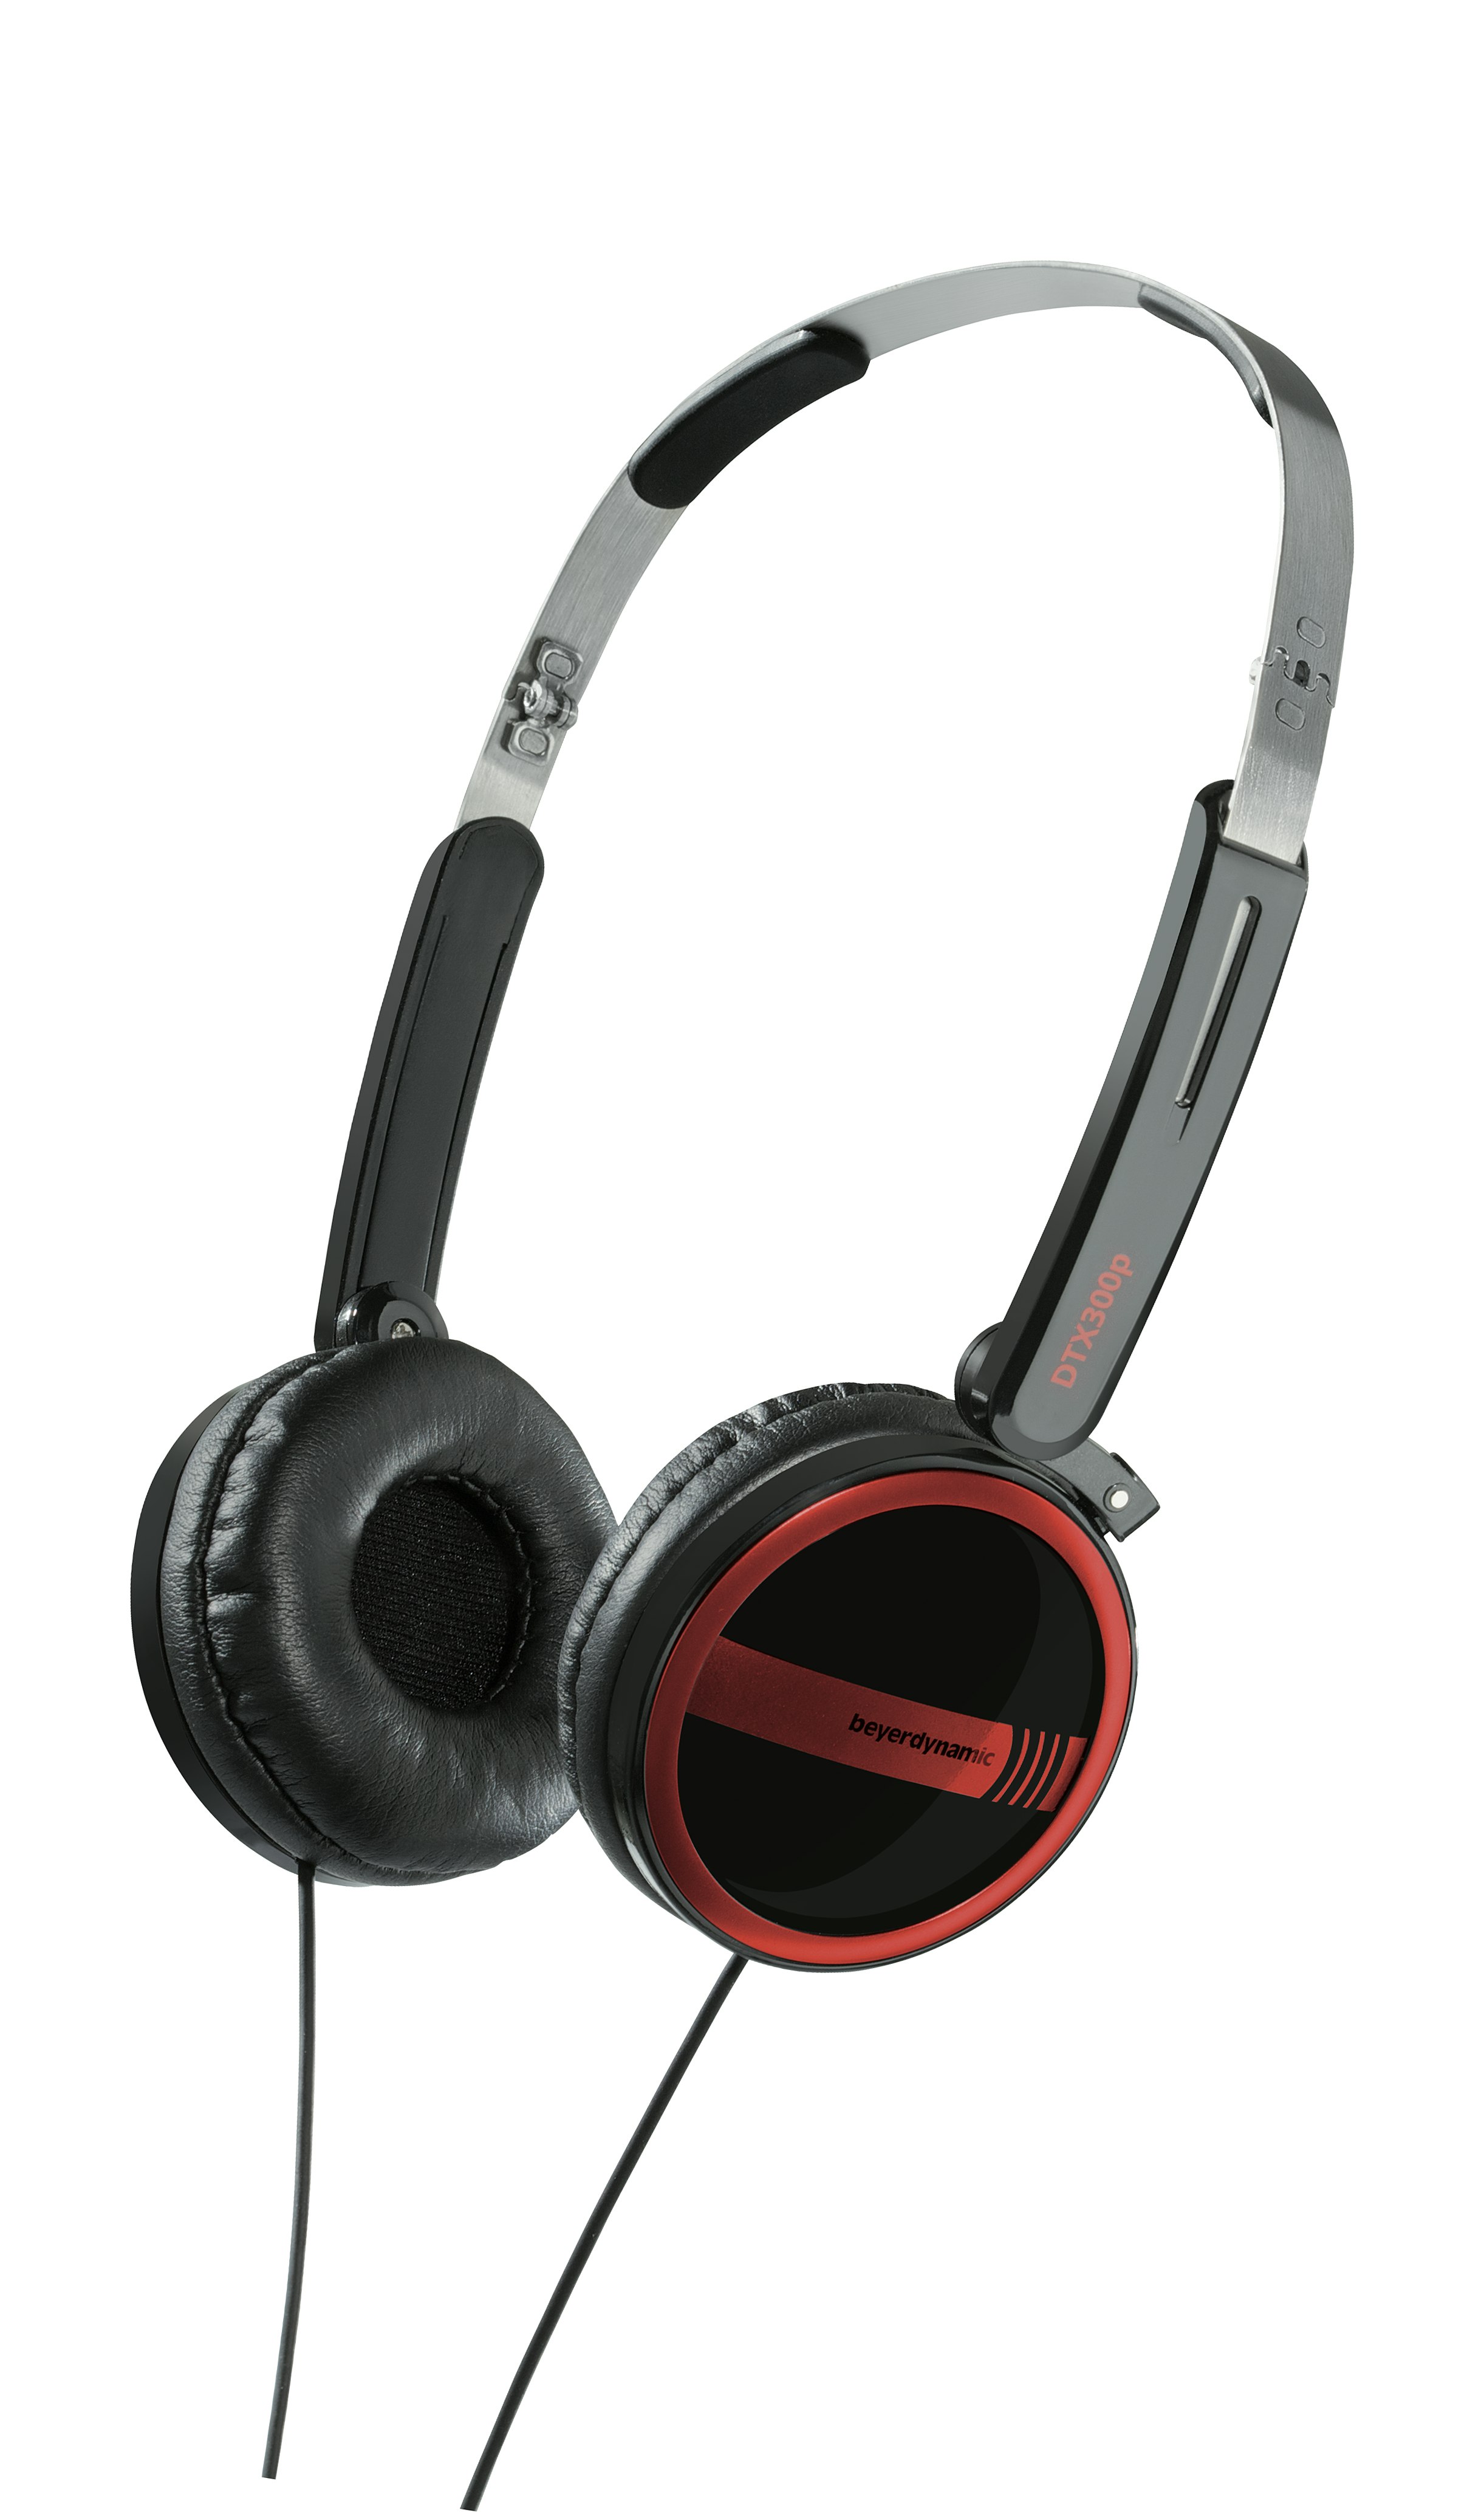 Shop Beyerdynamic DTX 300 P Portable Stereo Headphone & Discover